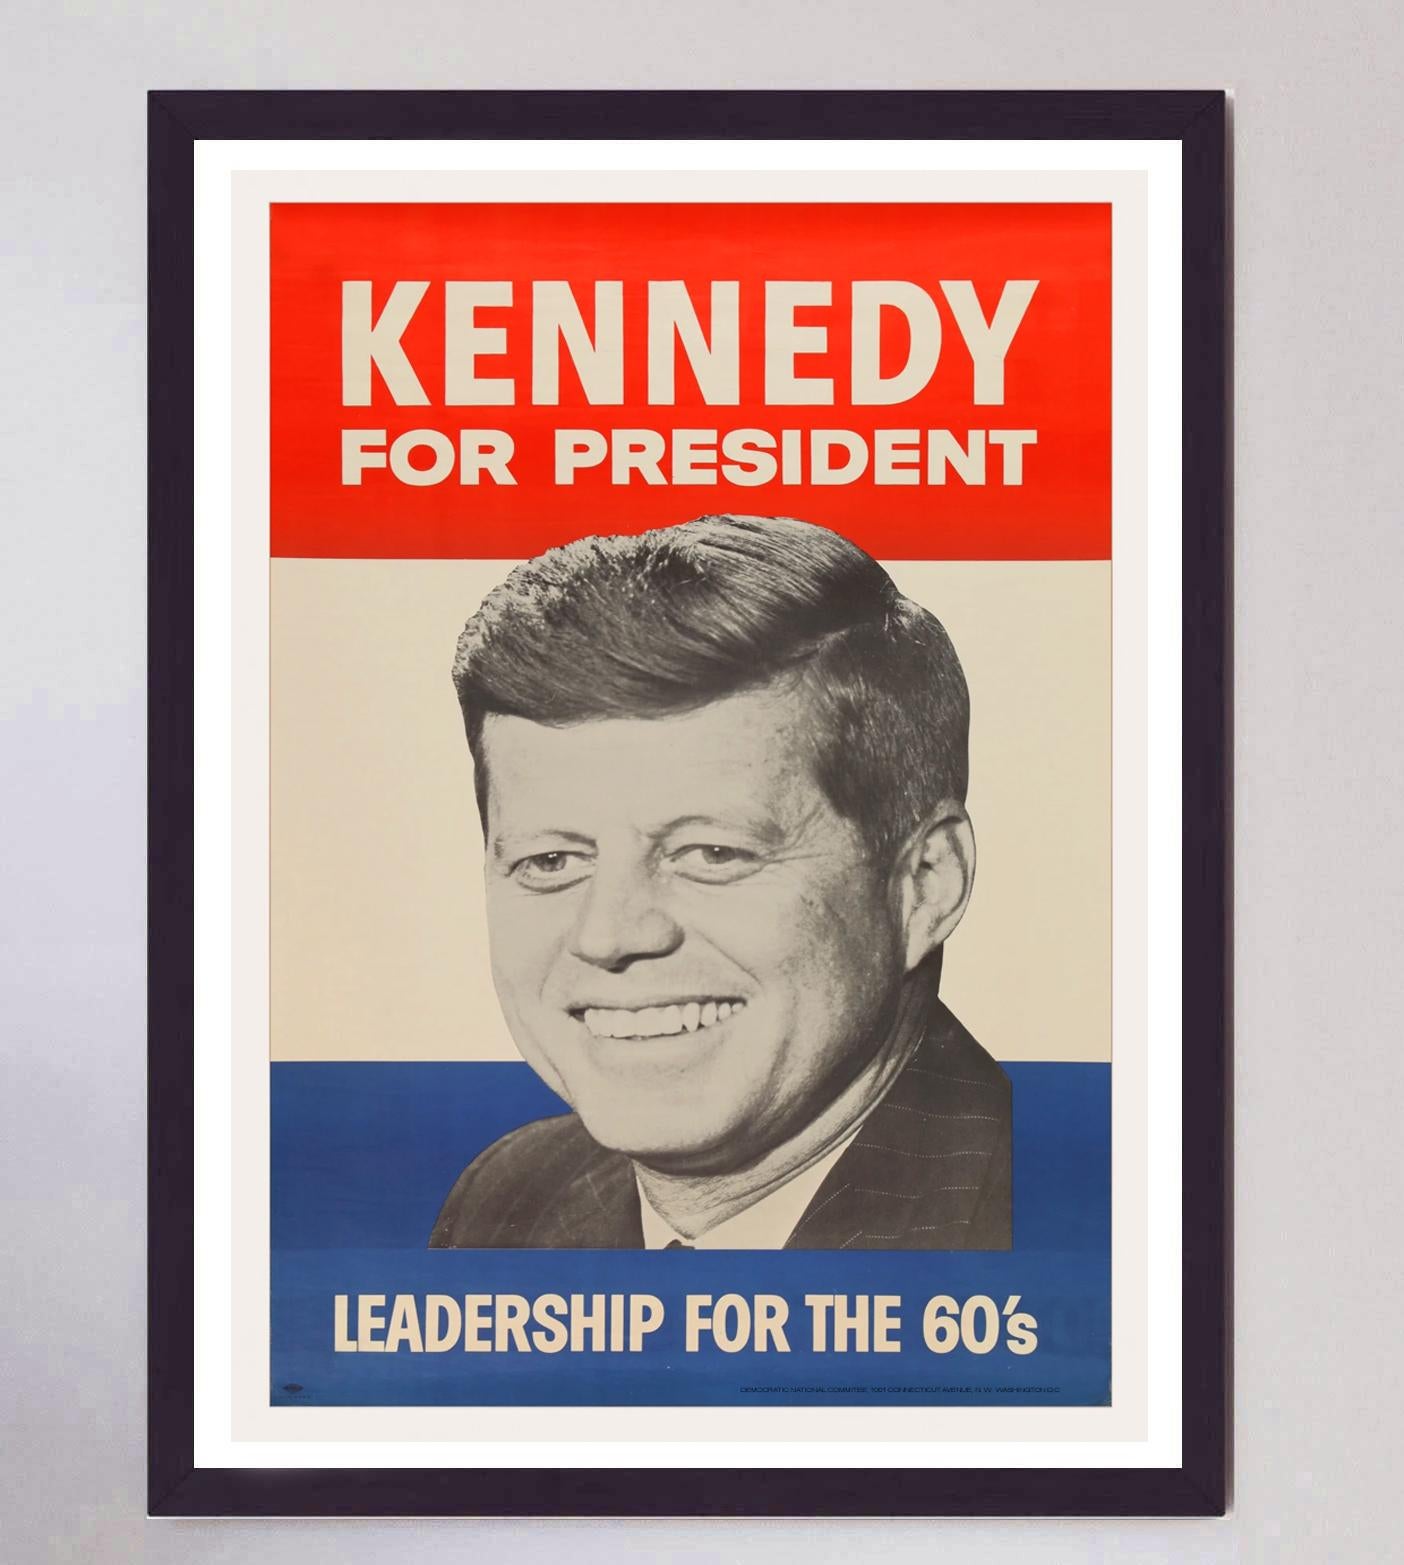 Milieu du XXe siècle 1960 Kennedy for President - Leadership for the 60's Original Vintage Poster en vente